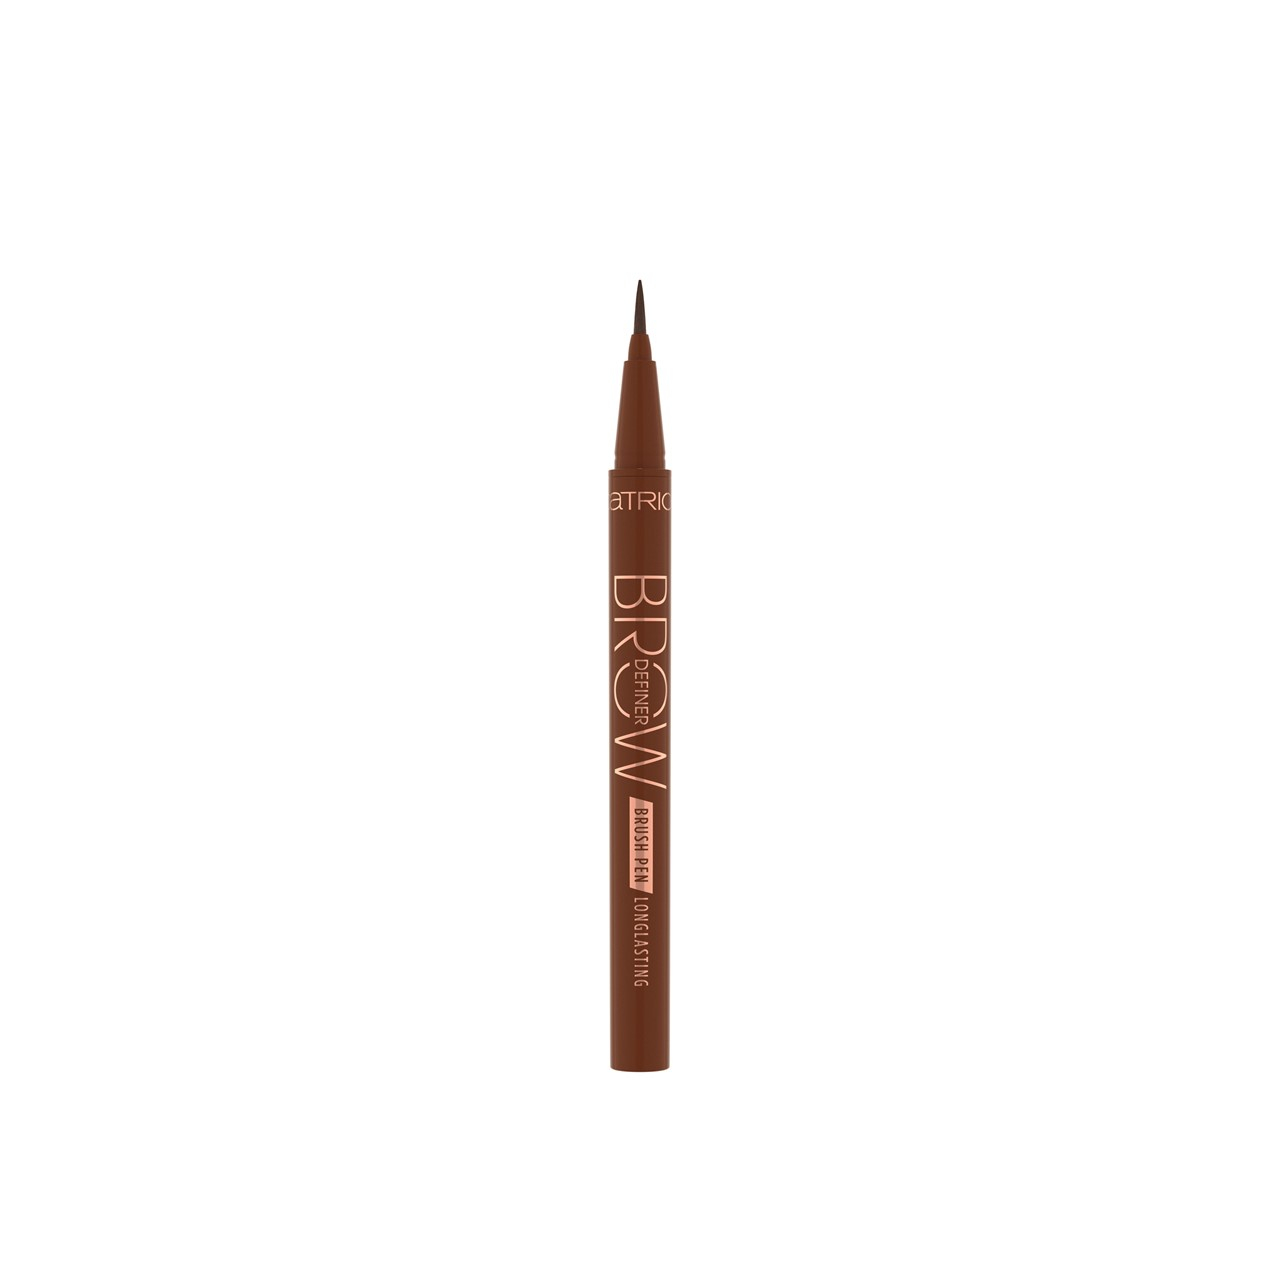 Catrice Brow Definer Brush Pen Longlasting 030 Chocolate Brown 0.7ml (0.02fl oz)